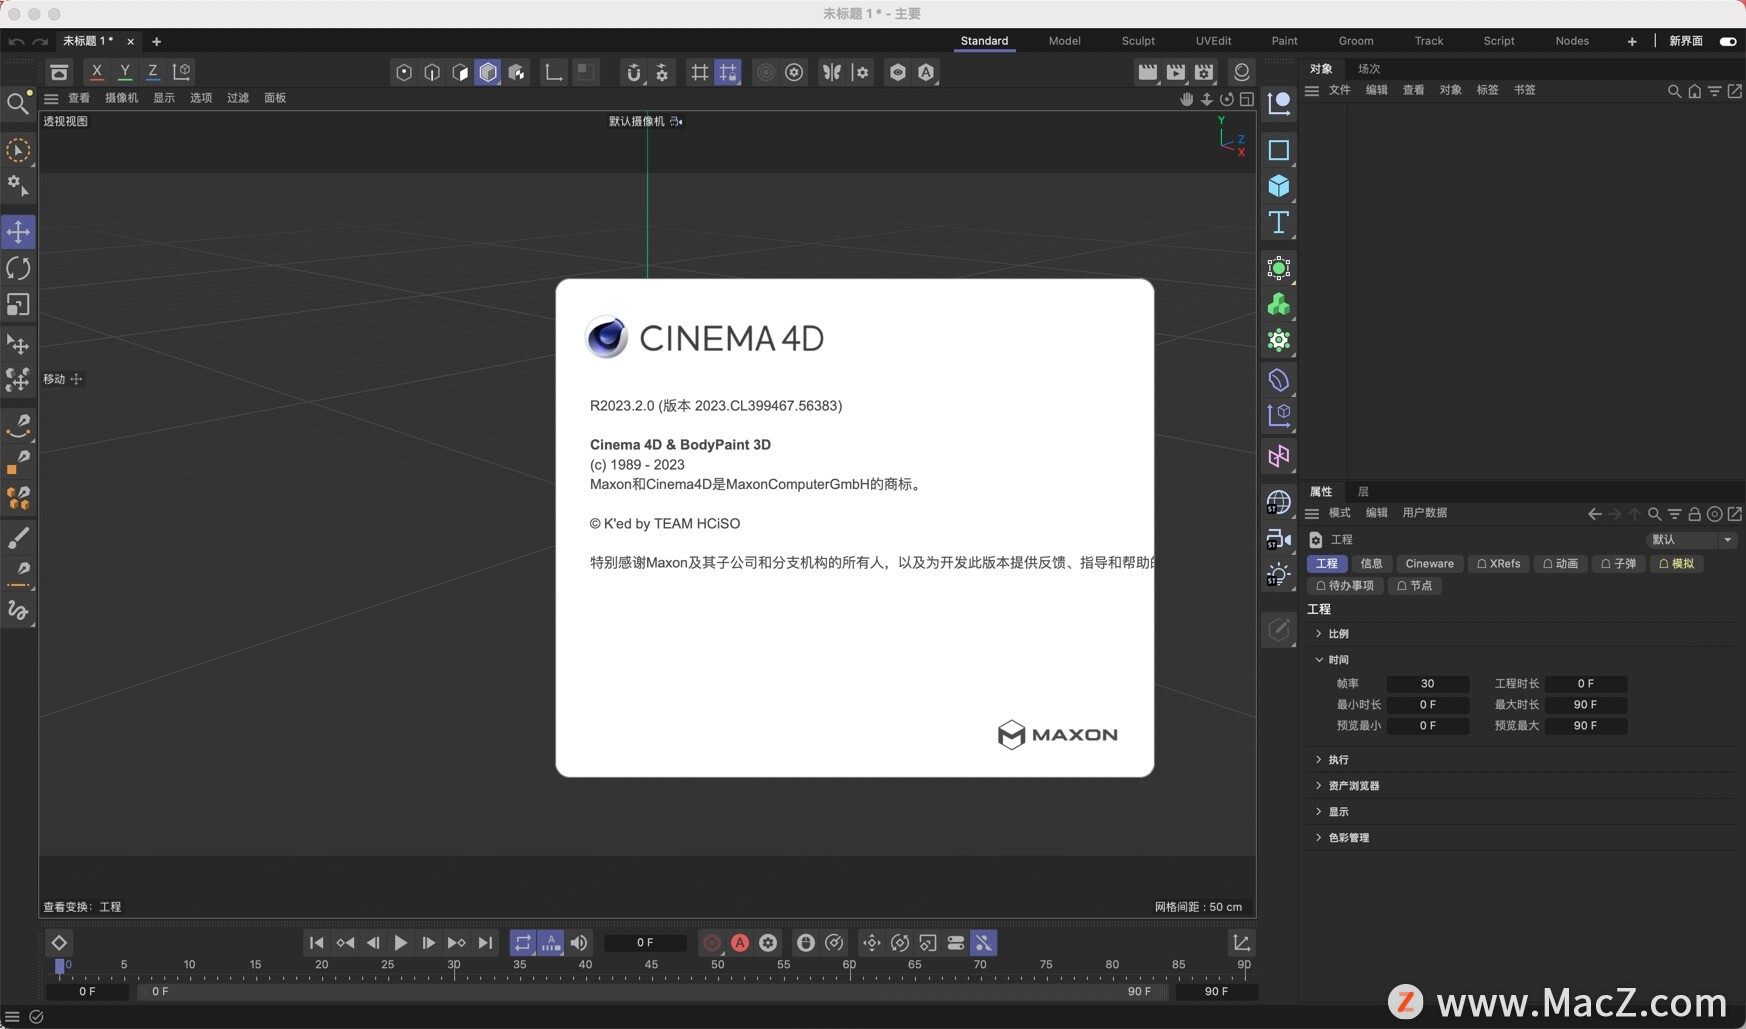 CINEMA 4D Studio R2023 for Mac，超好用的三维动画设计工具